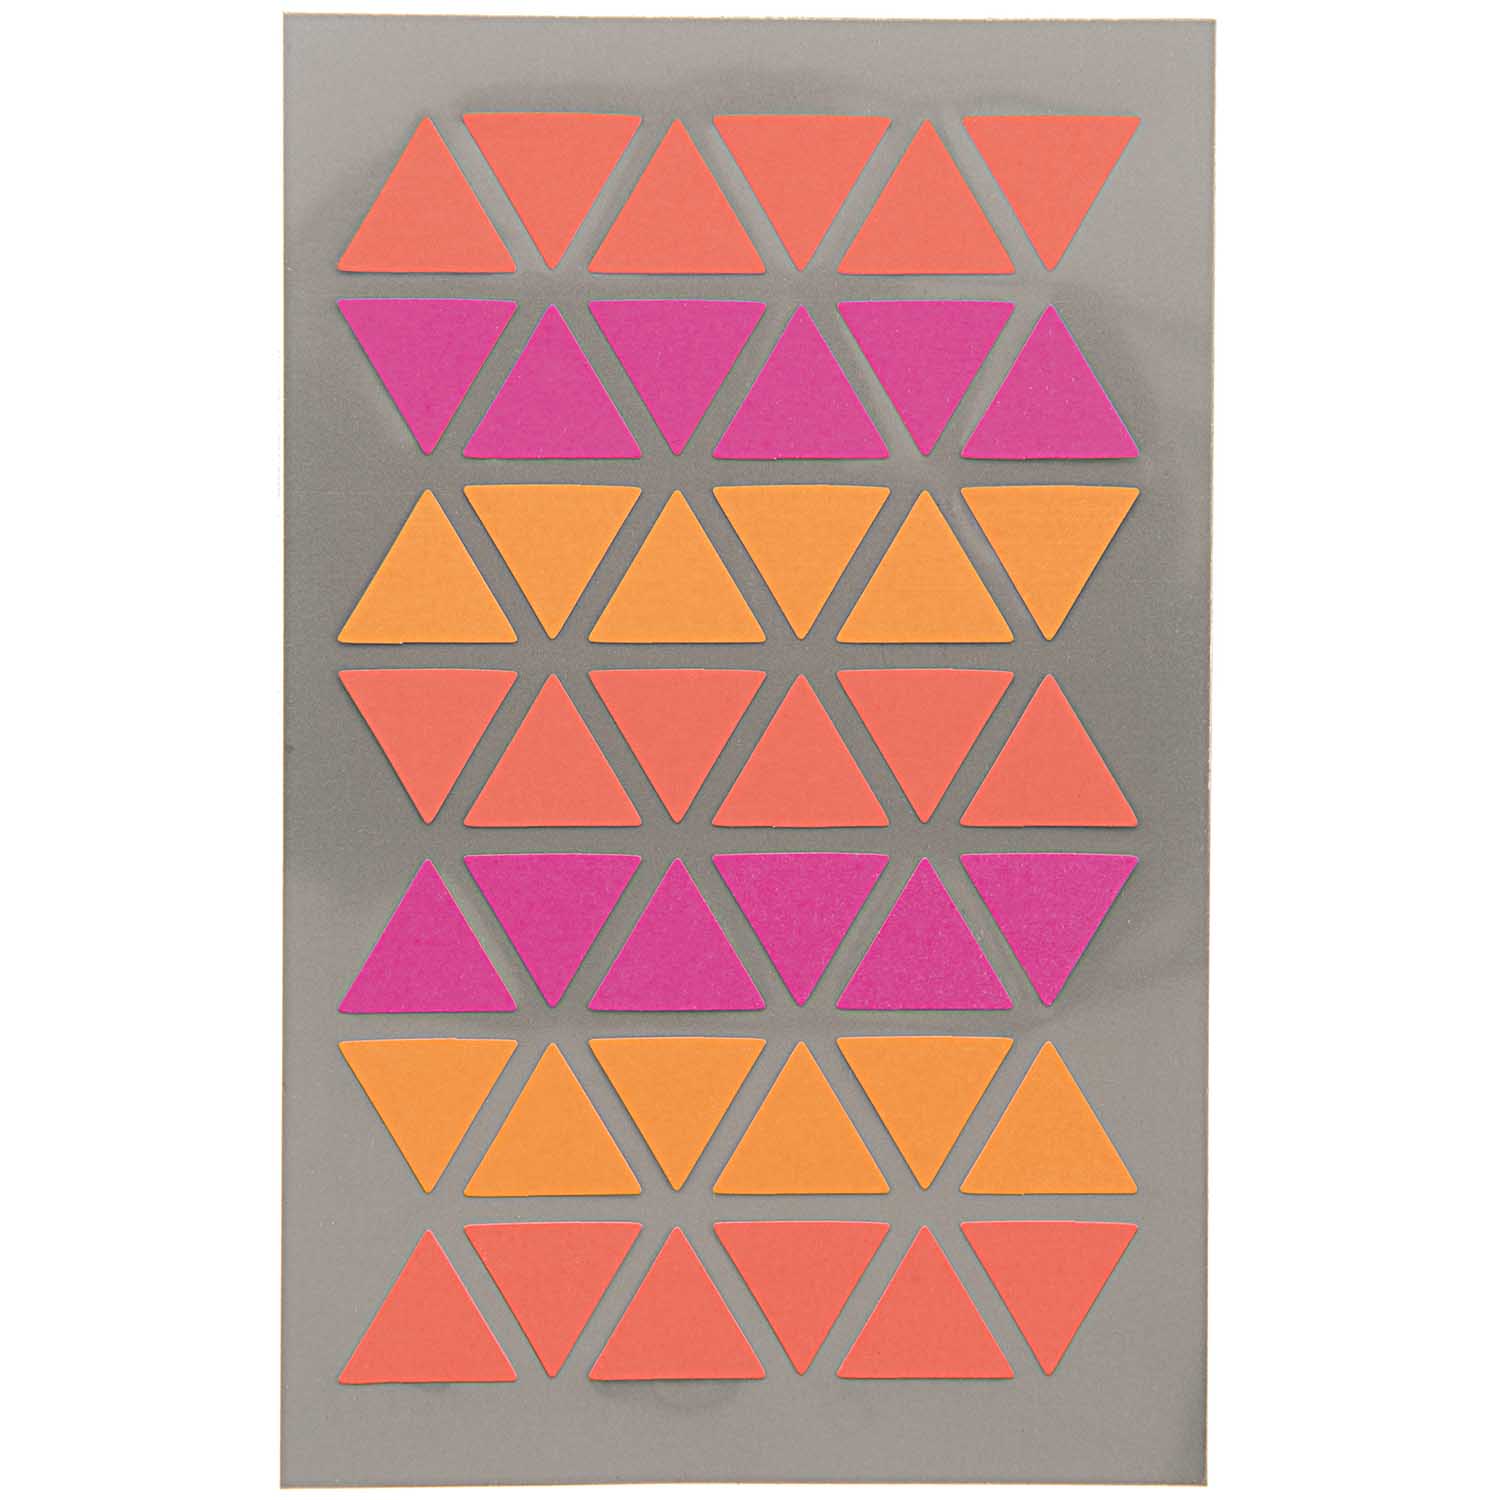 NEU Office Sticker, Dreiecke, rot-orange-pink, 4 Blatt